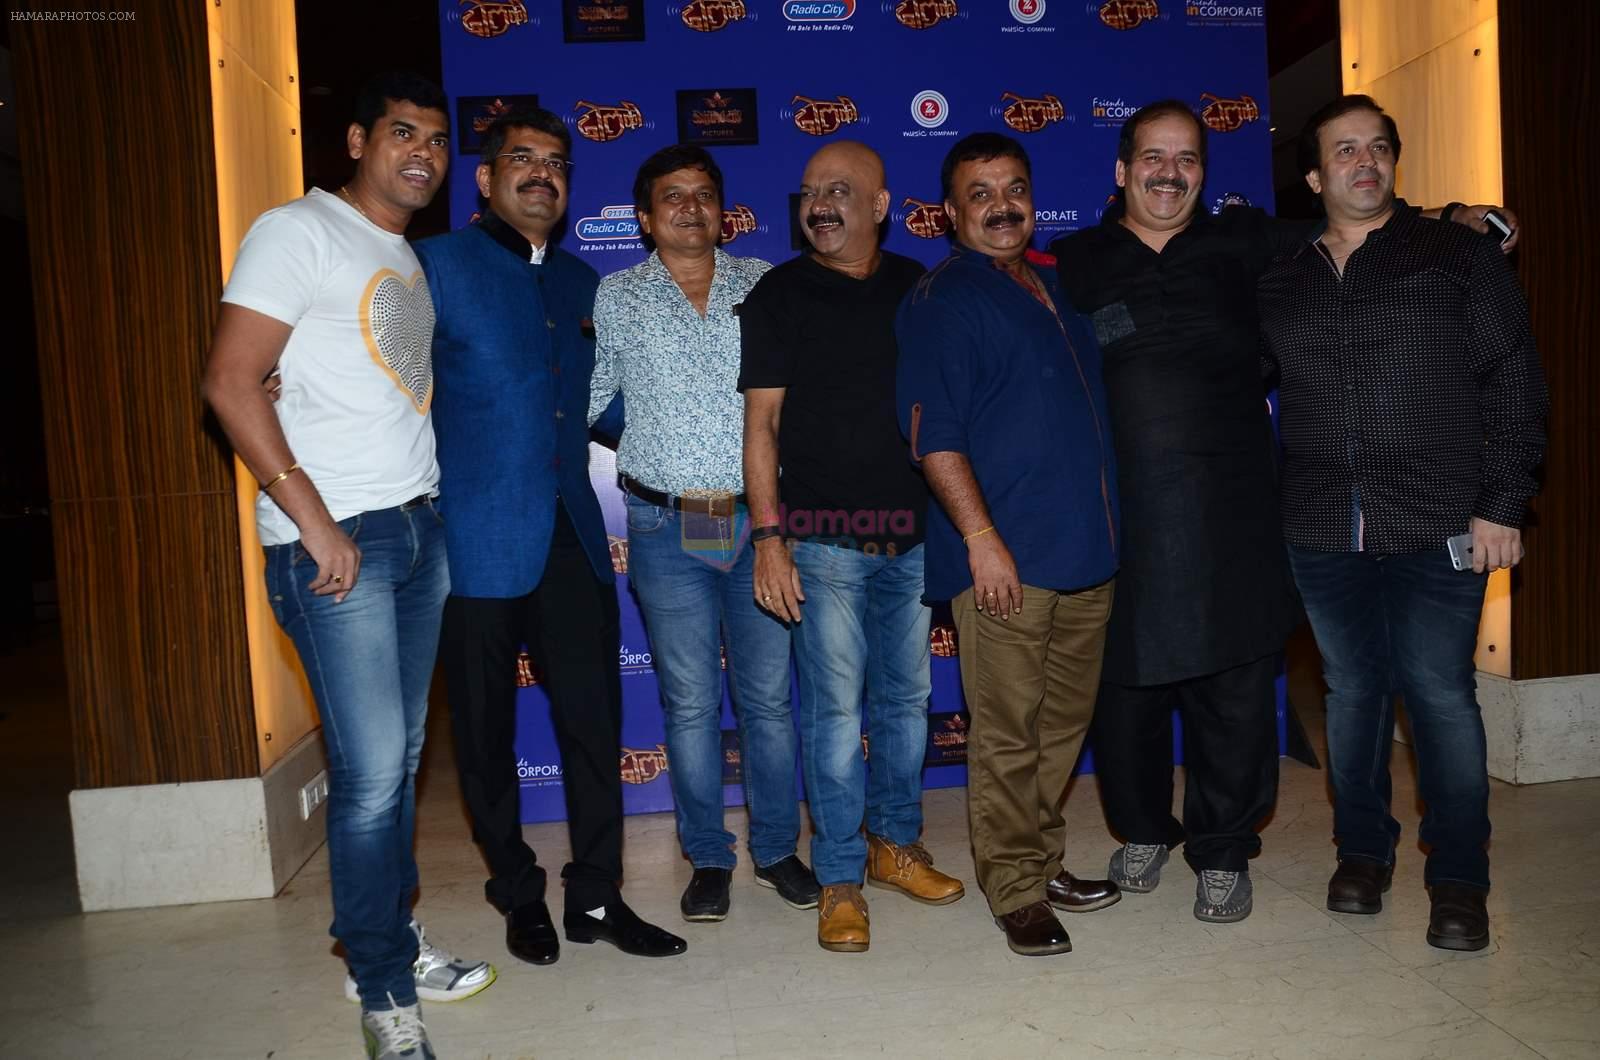 Siddarth Jadhav at the Music launch of film Dholki on 29th July 2015